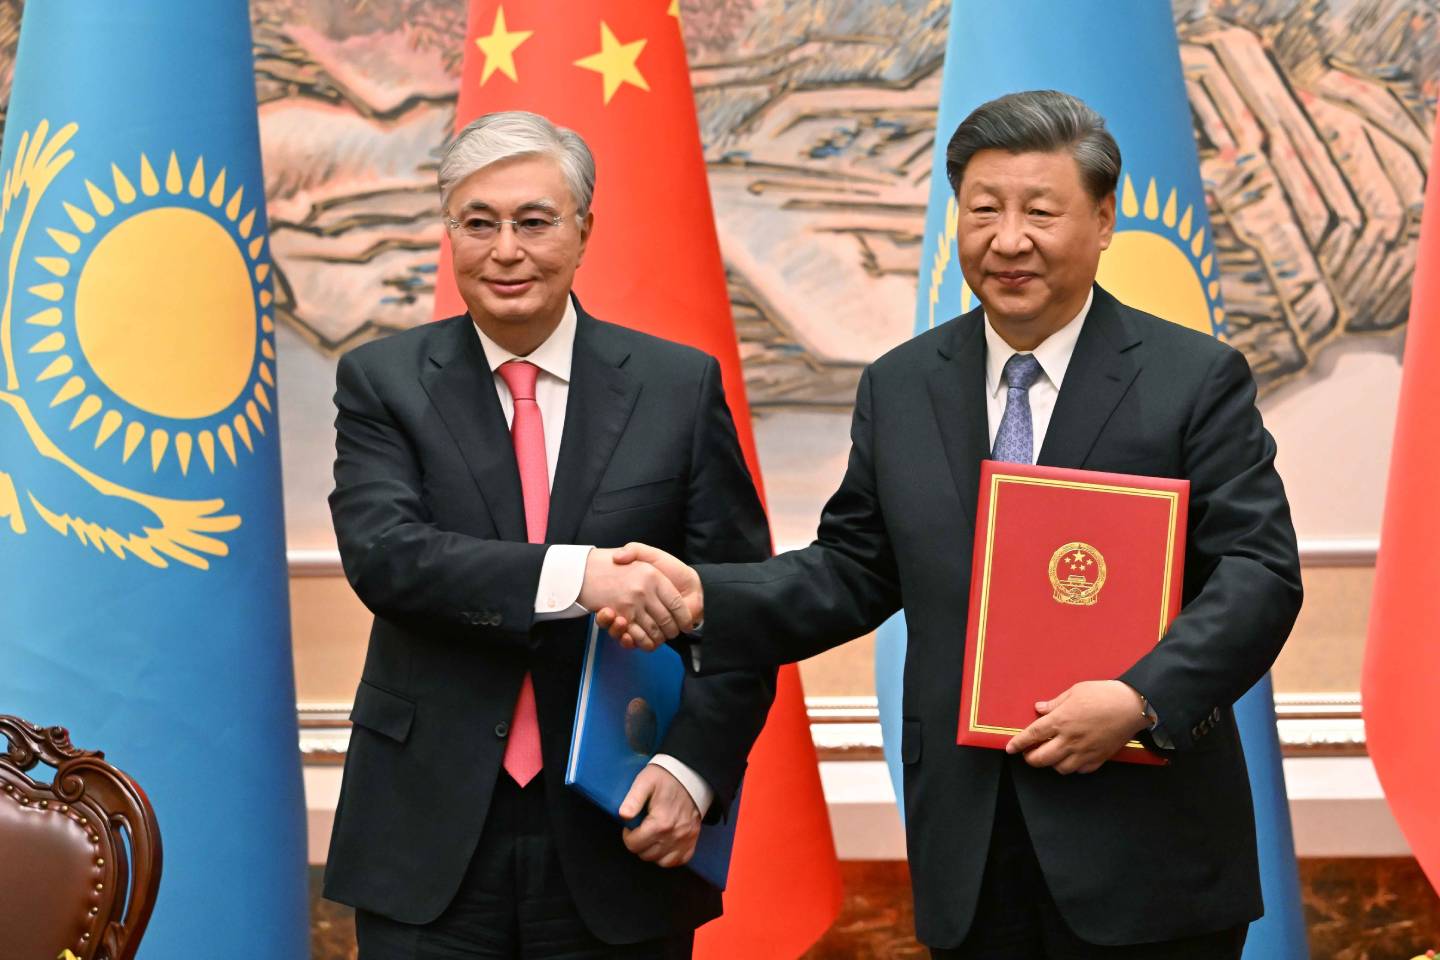 Новости Казахстана / Политика в Казахстане / Плодотворная работа: более 20 документов подписано в рамках госвизита Токаева в Китай